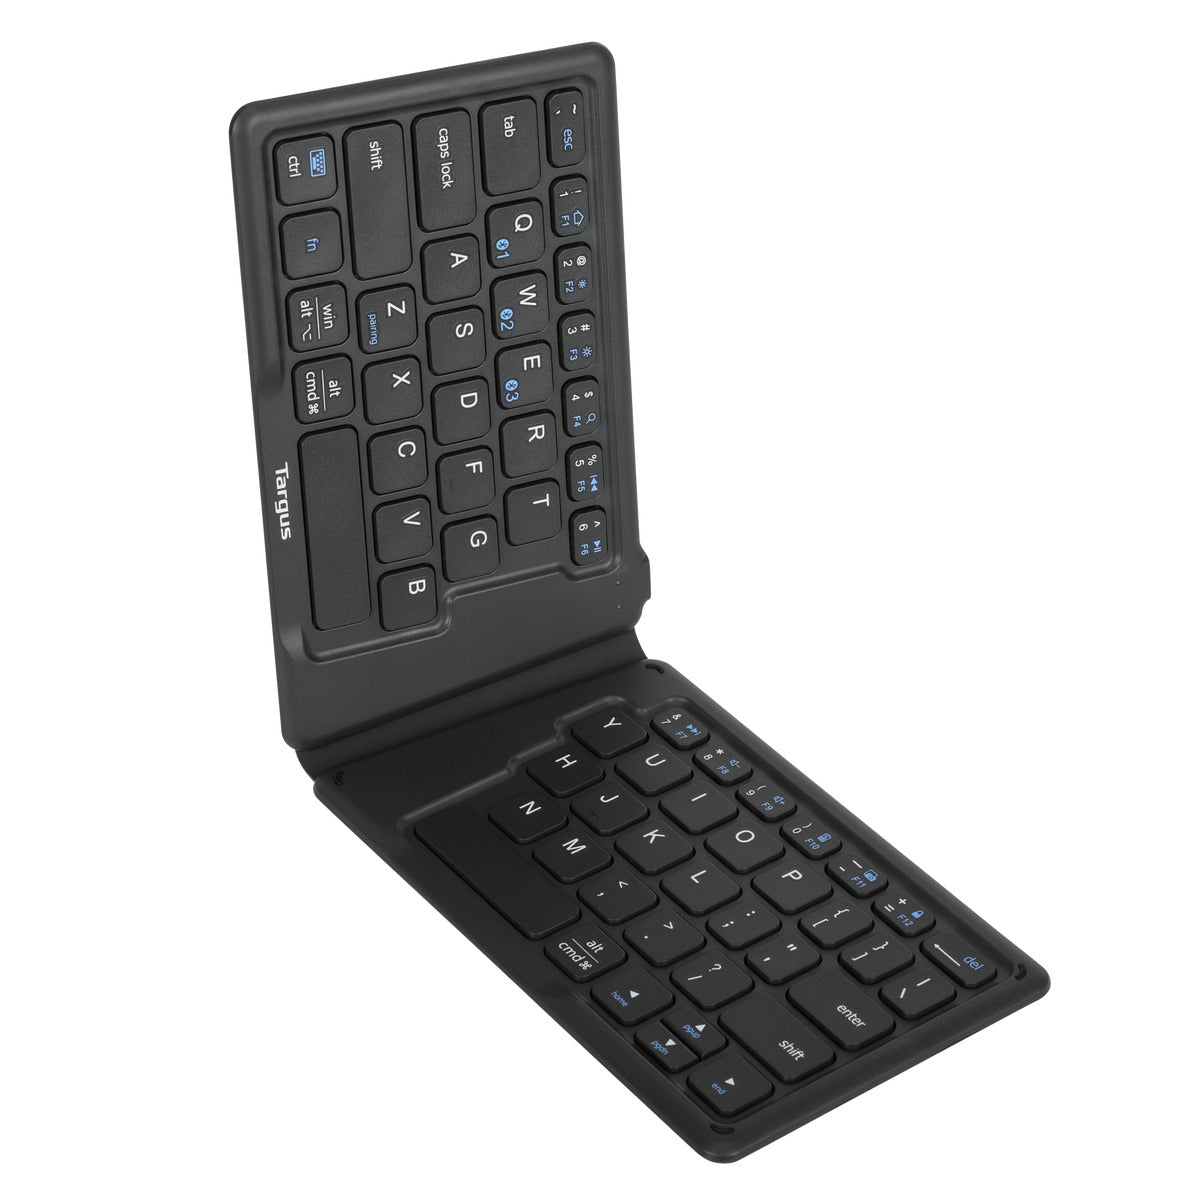 Targus AKF003 Ergonomic Foldable Bluetooth Antimicrobial Keyboard